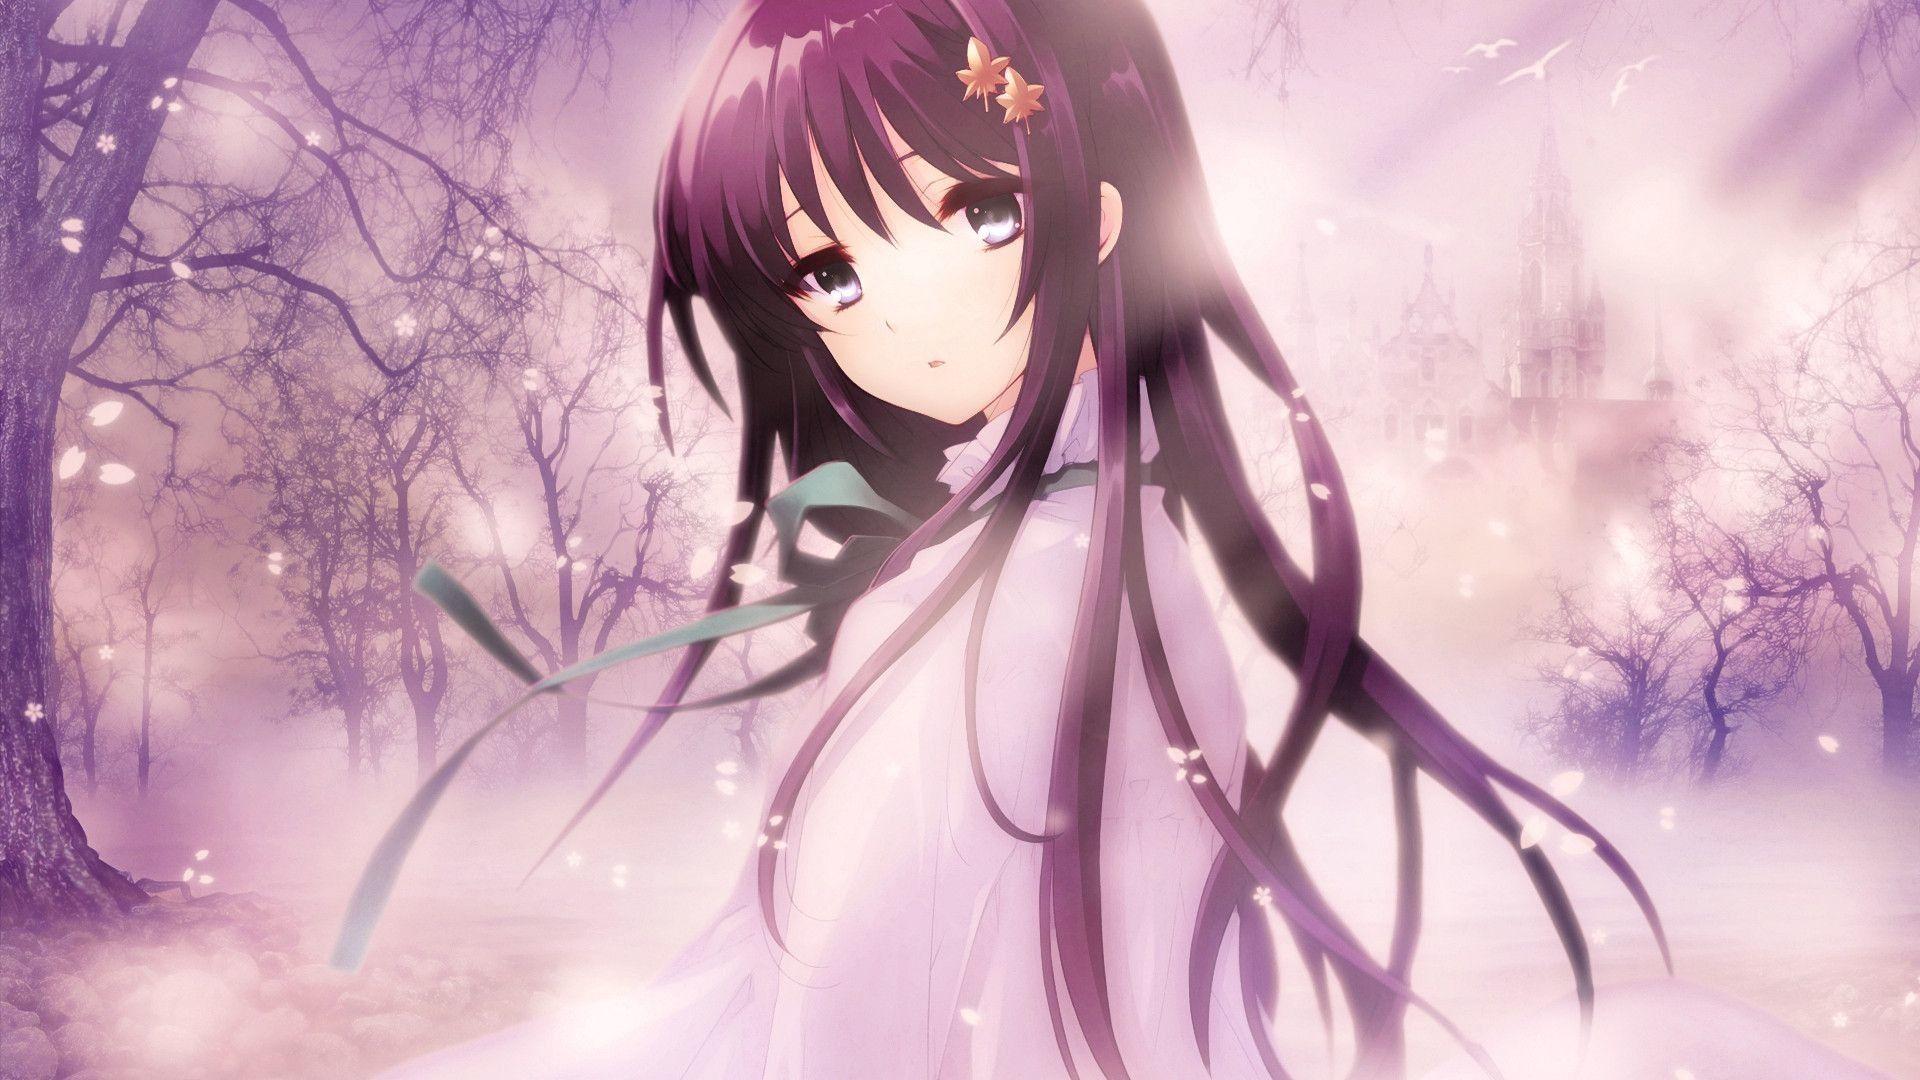 Premium AI Image | Anime cute kawaii girl character image wallpaper  illustration background sunrise sunset young woman